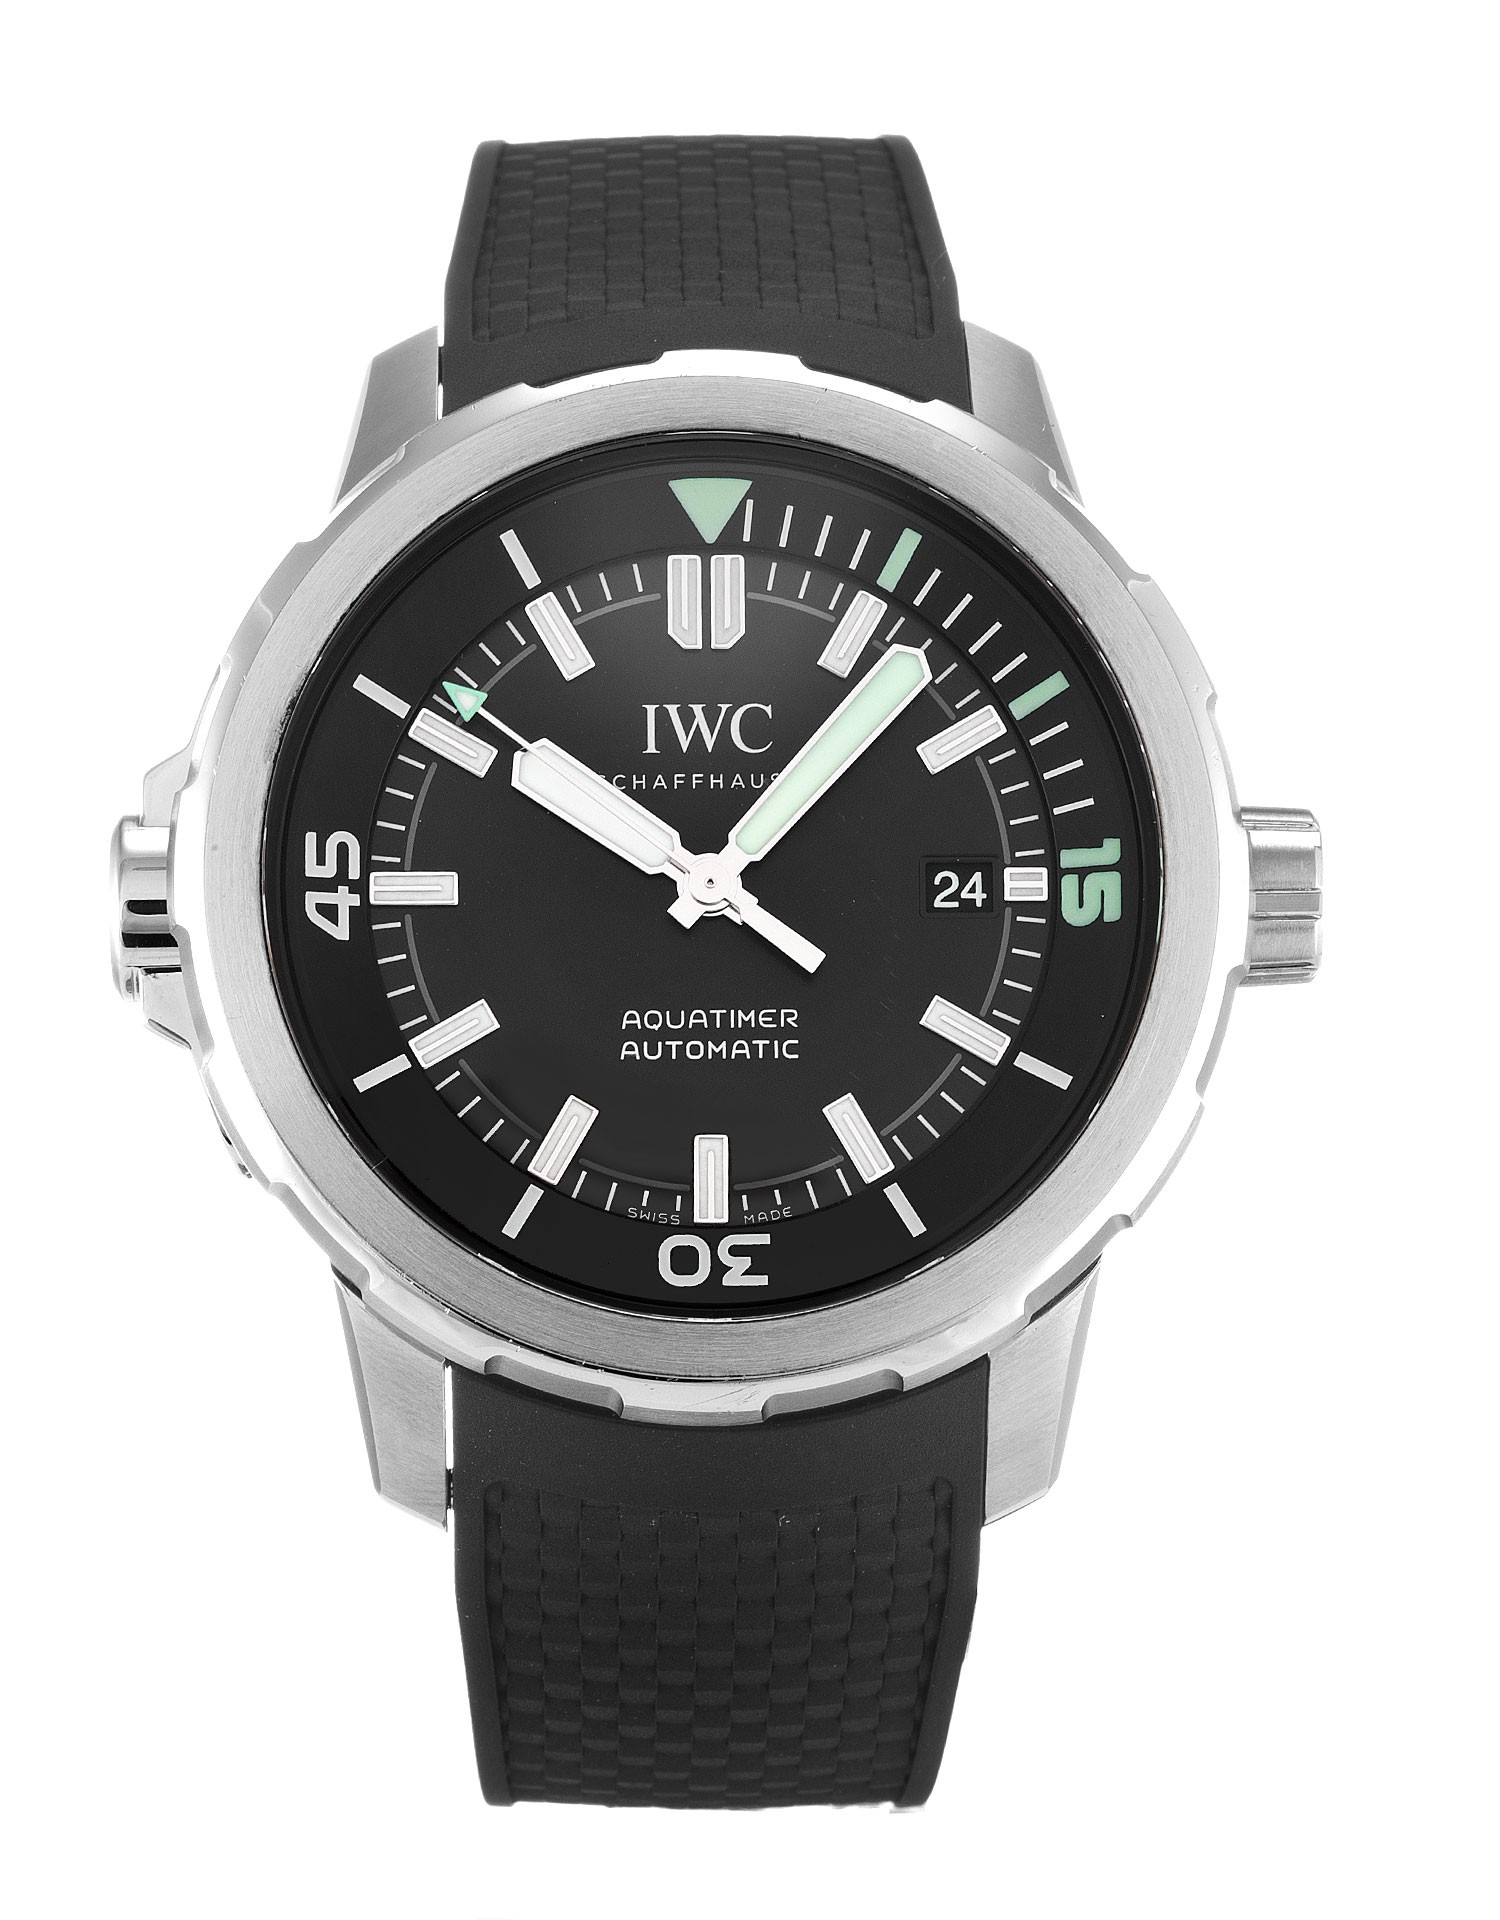 Replica IWC Aquatimer IW329001